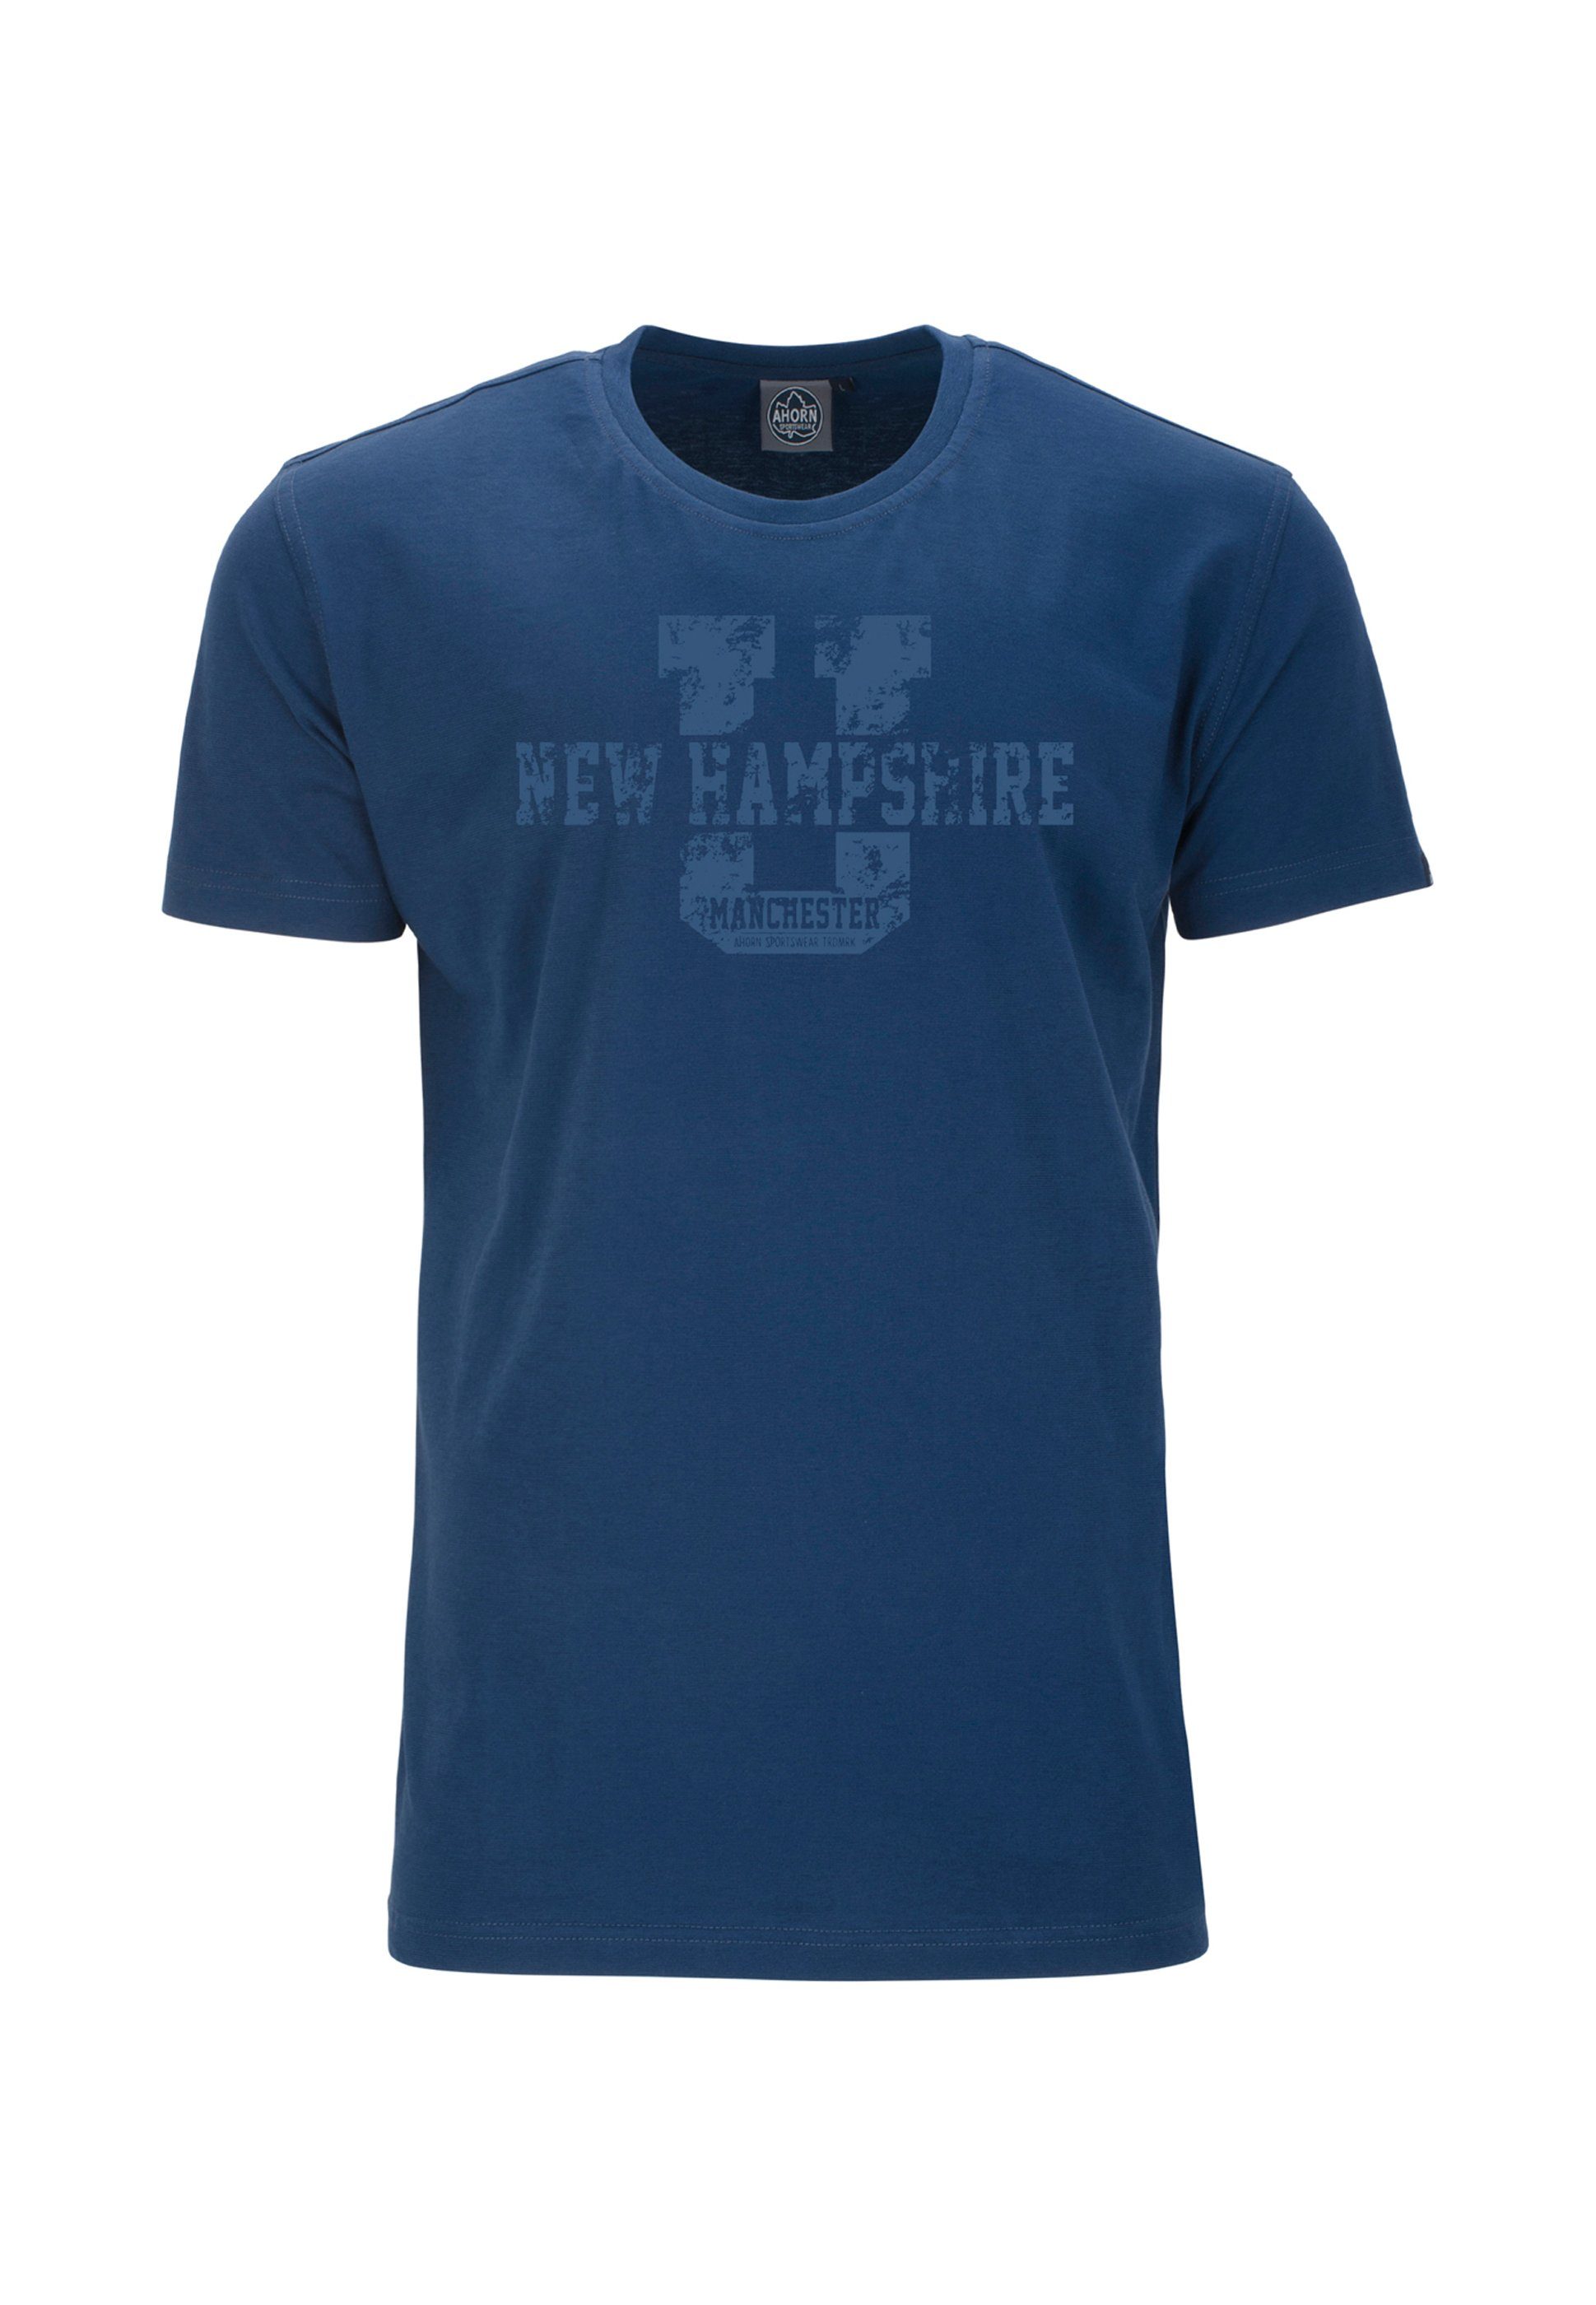 AHORN SPORTSWEAR blau mit HAMPSHIRE NEW coolem Frontprint T-Shirt